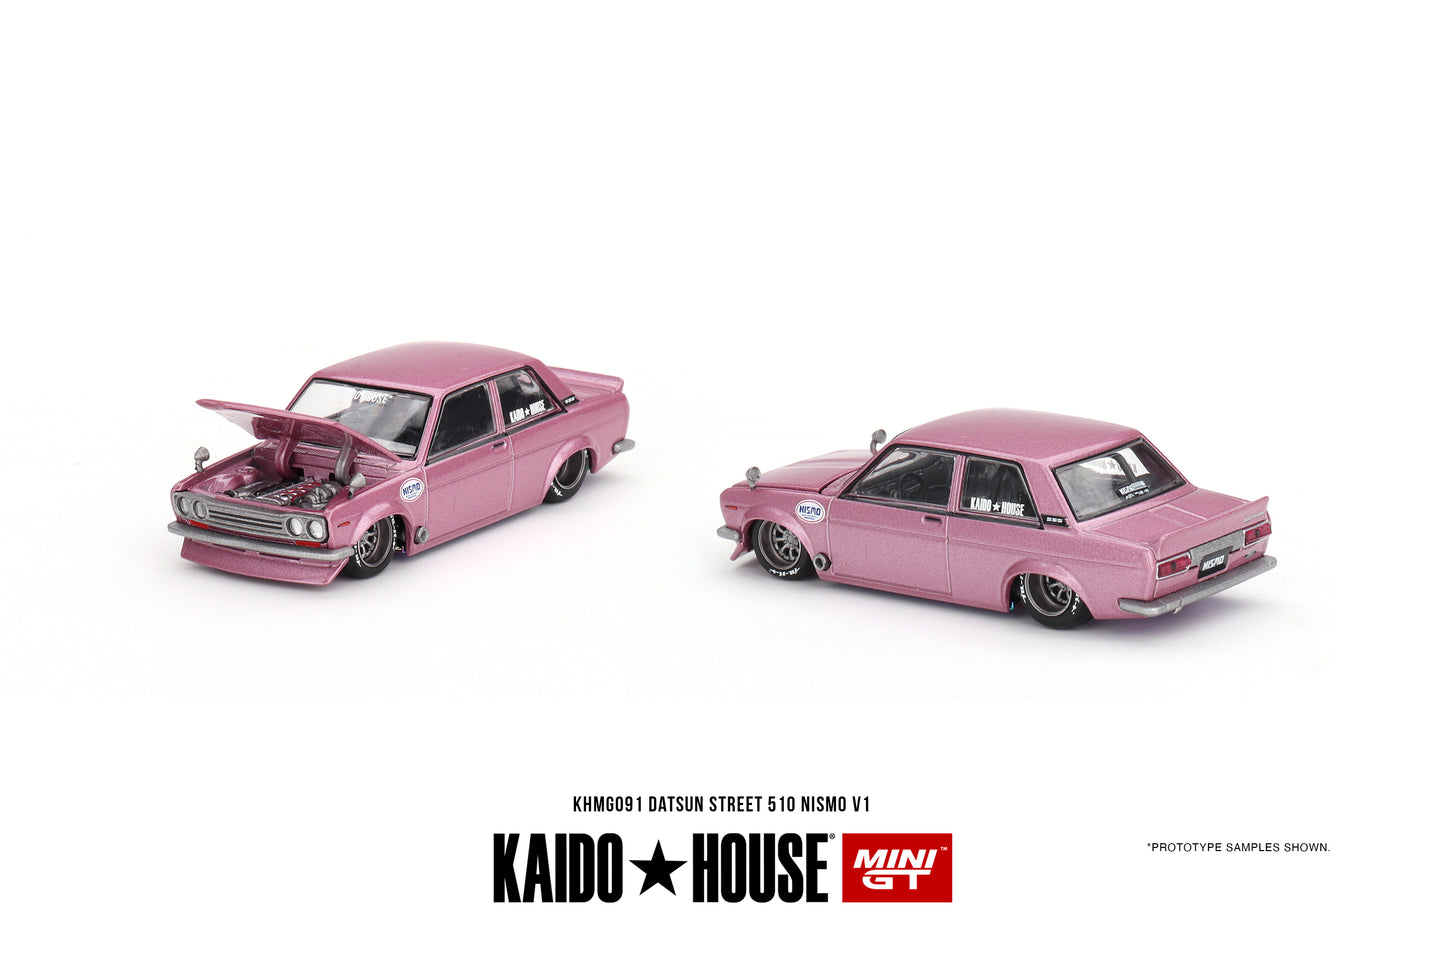 Mini GT x Kaido House No.091 Datsun Street 510 Nismo V1